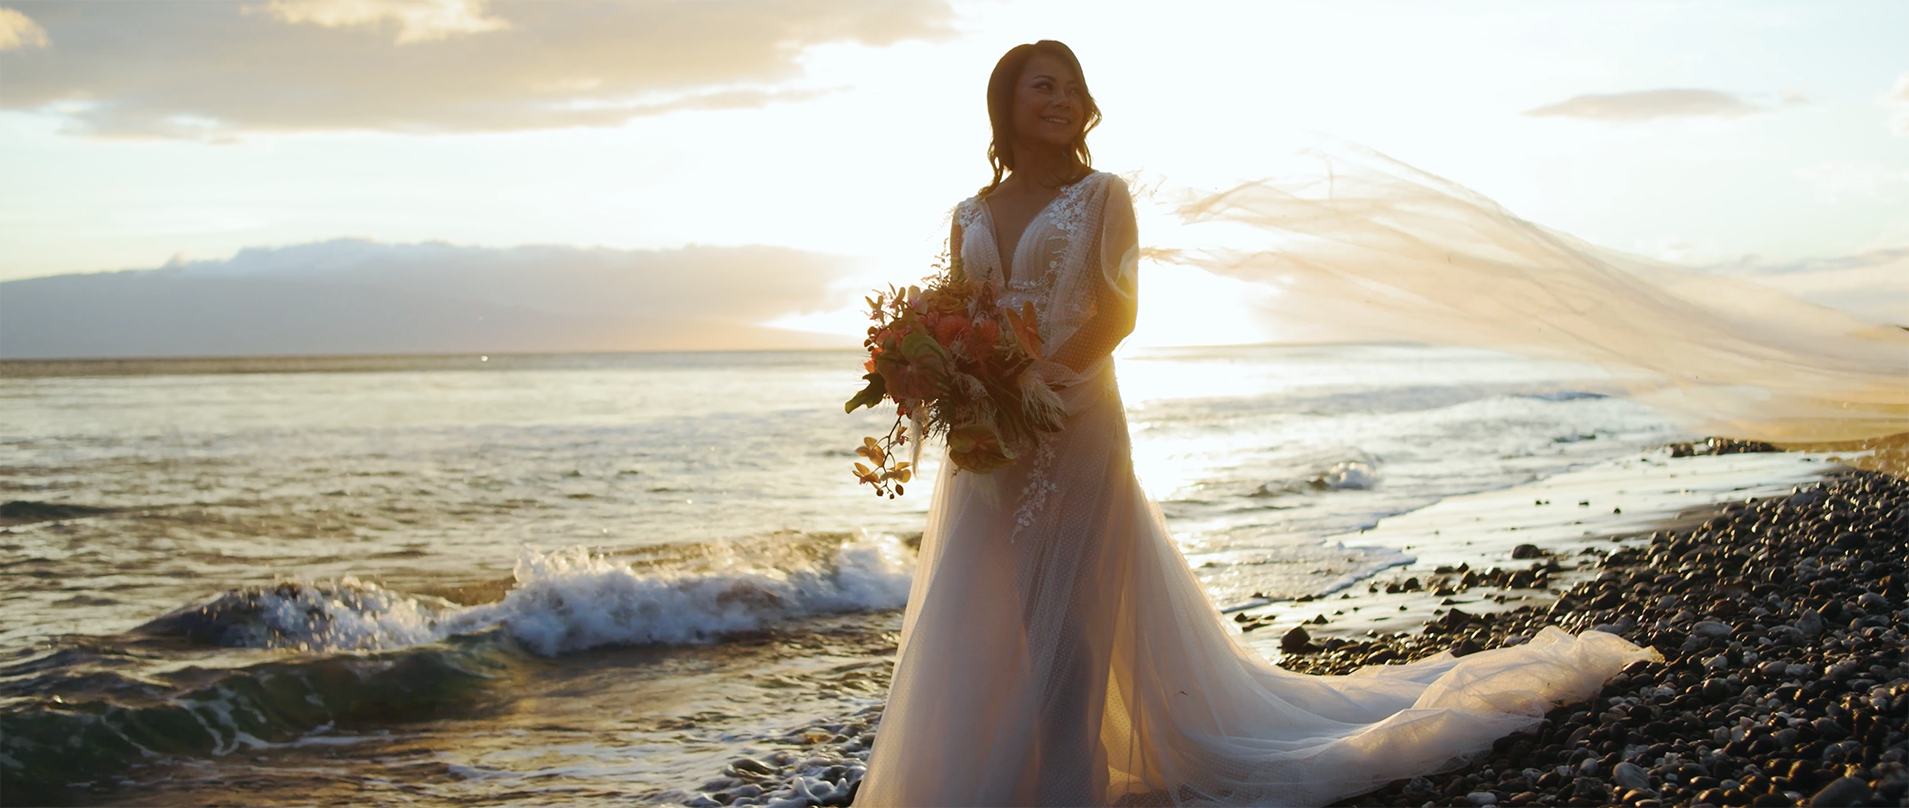 Well Travelled Bride Hawaii Destination Wedding Videographer Zeb Films 3.png